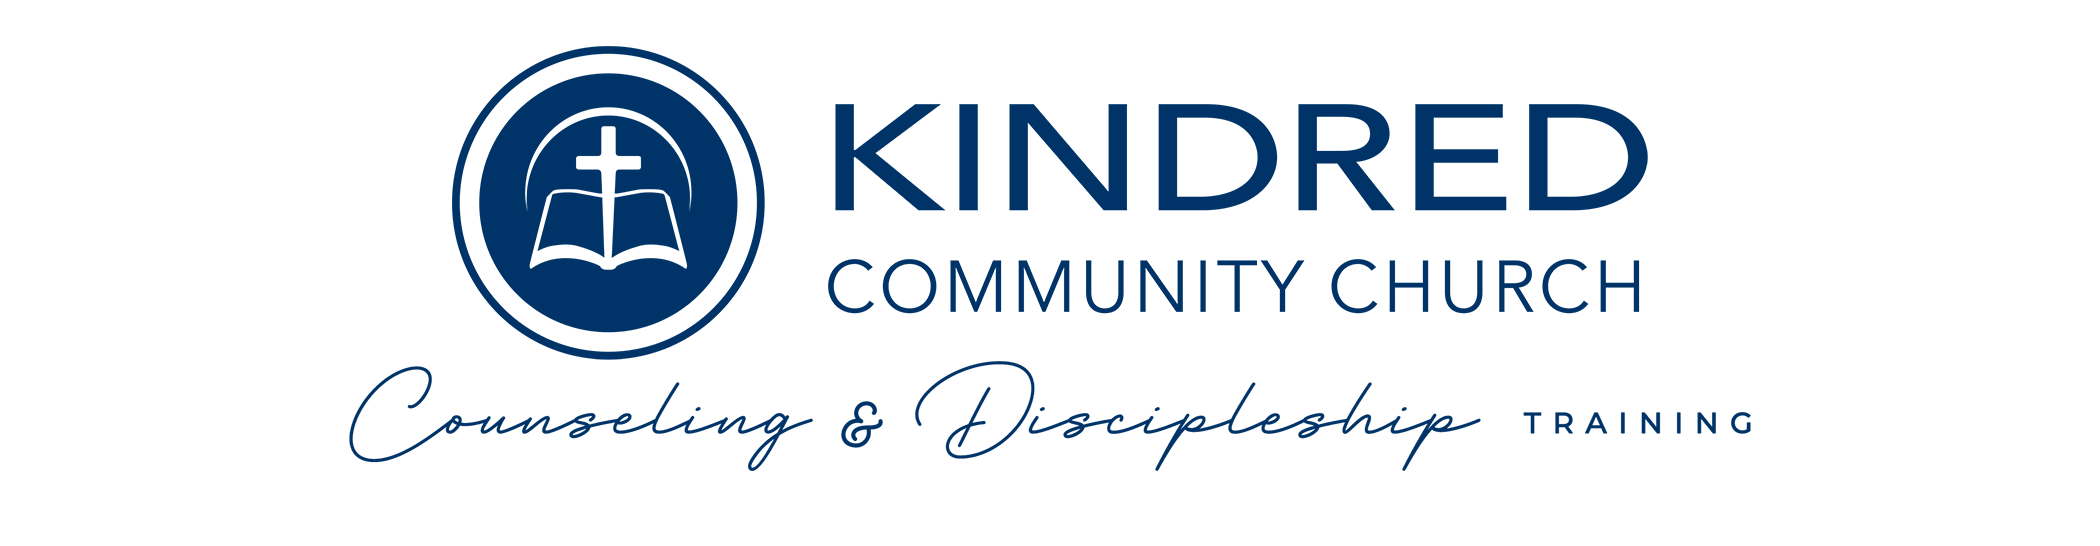 Kindred & CDT logos - combo